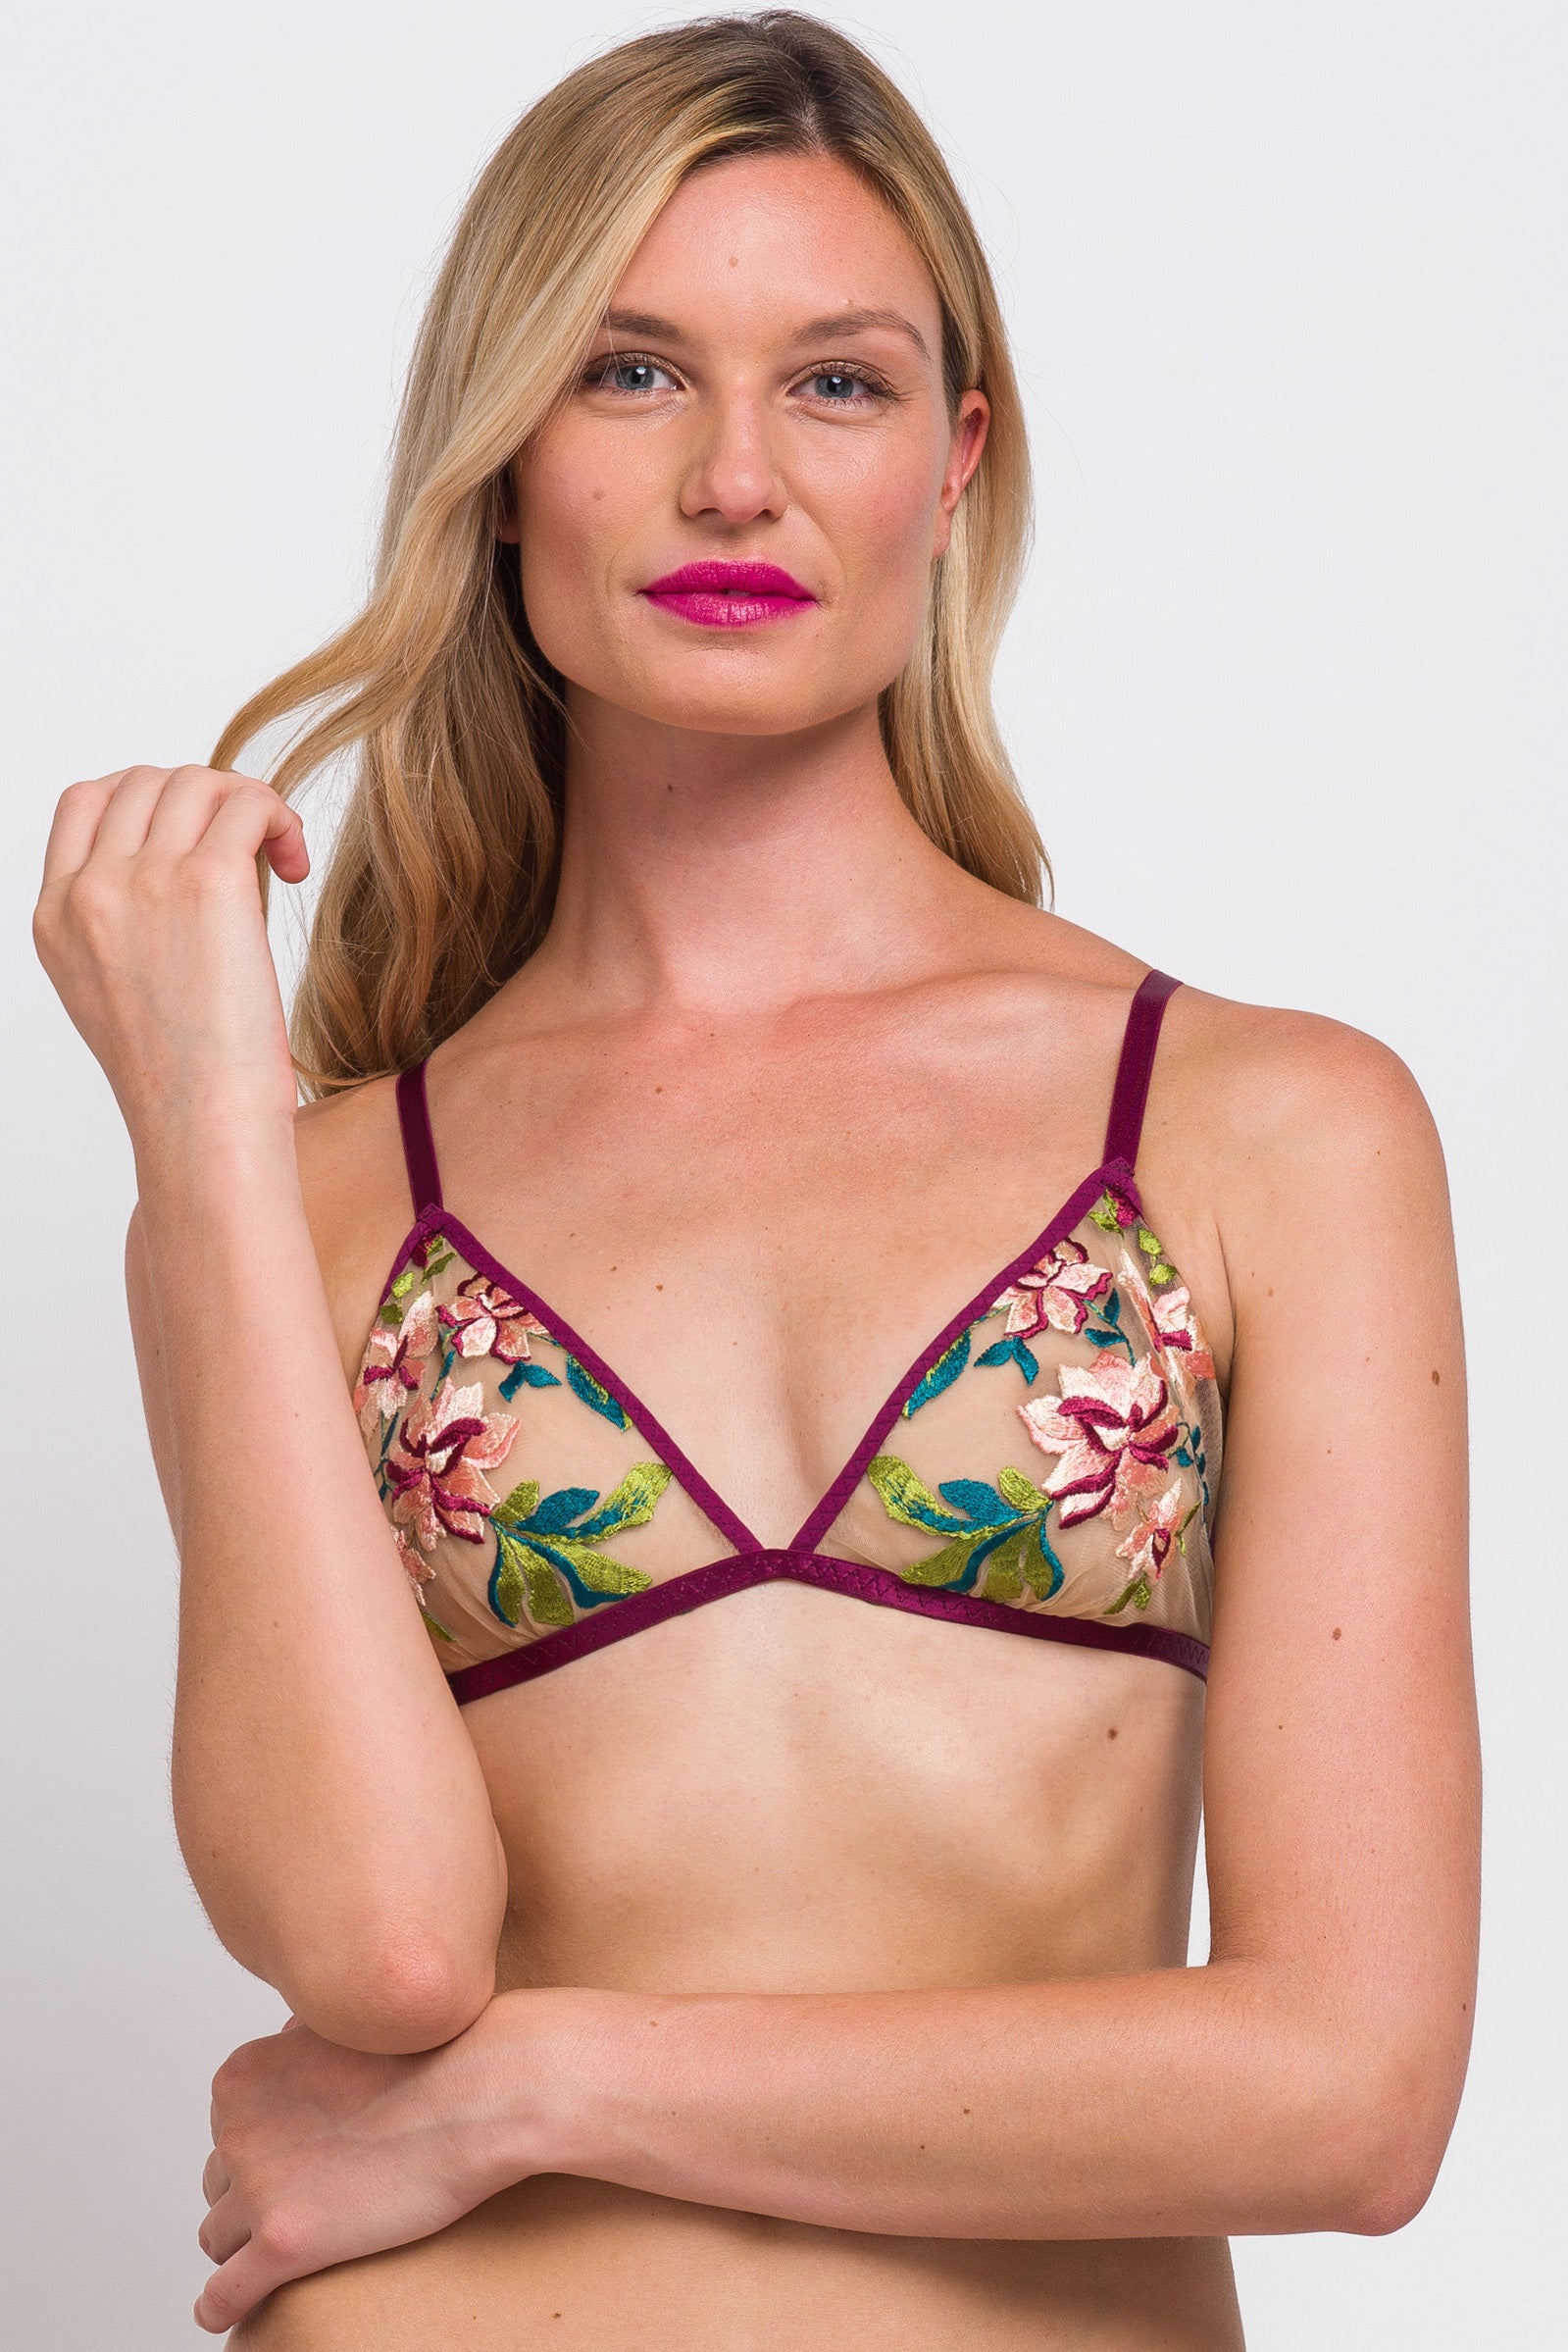 Camellia knickers  Designer embroidered lingerie sets